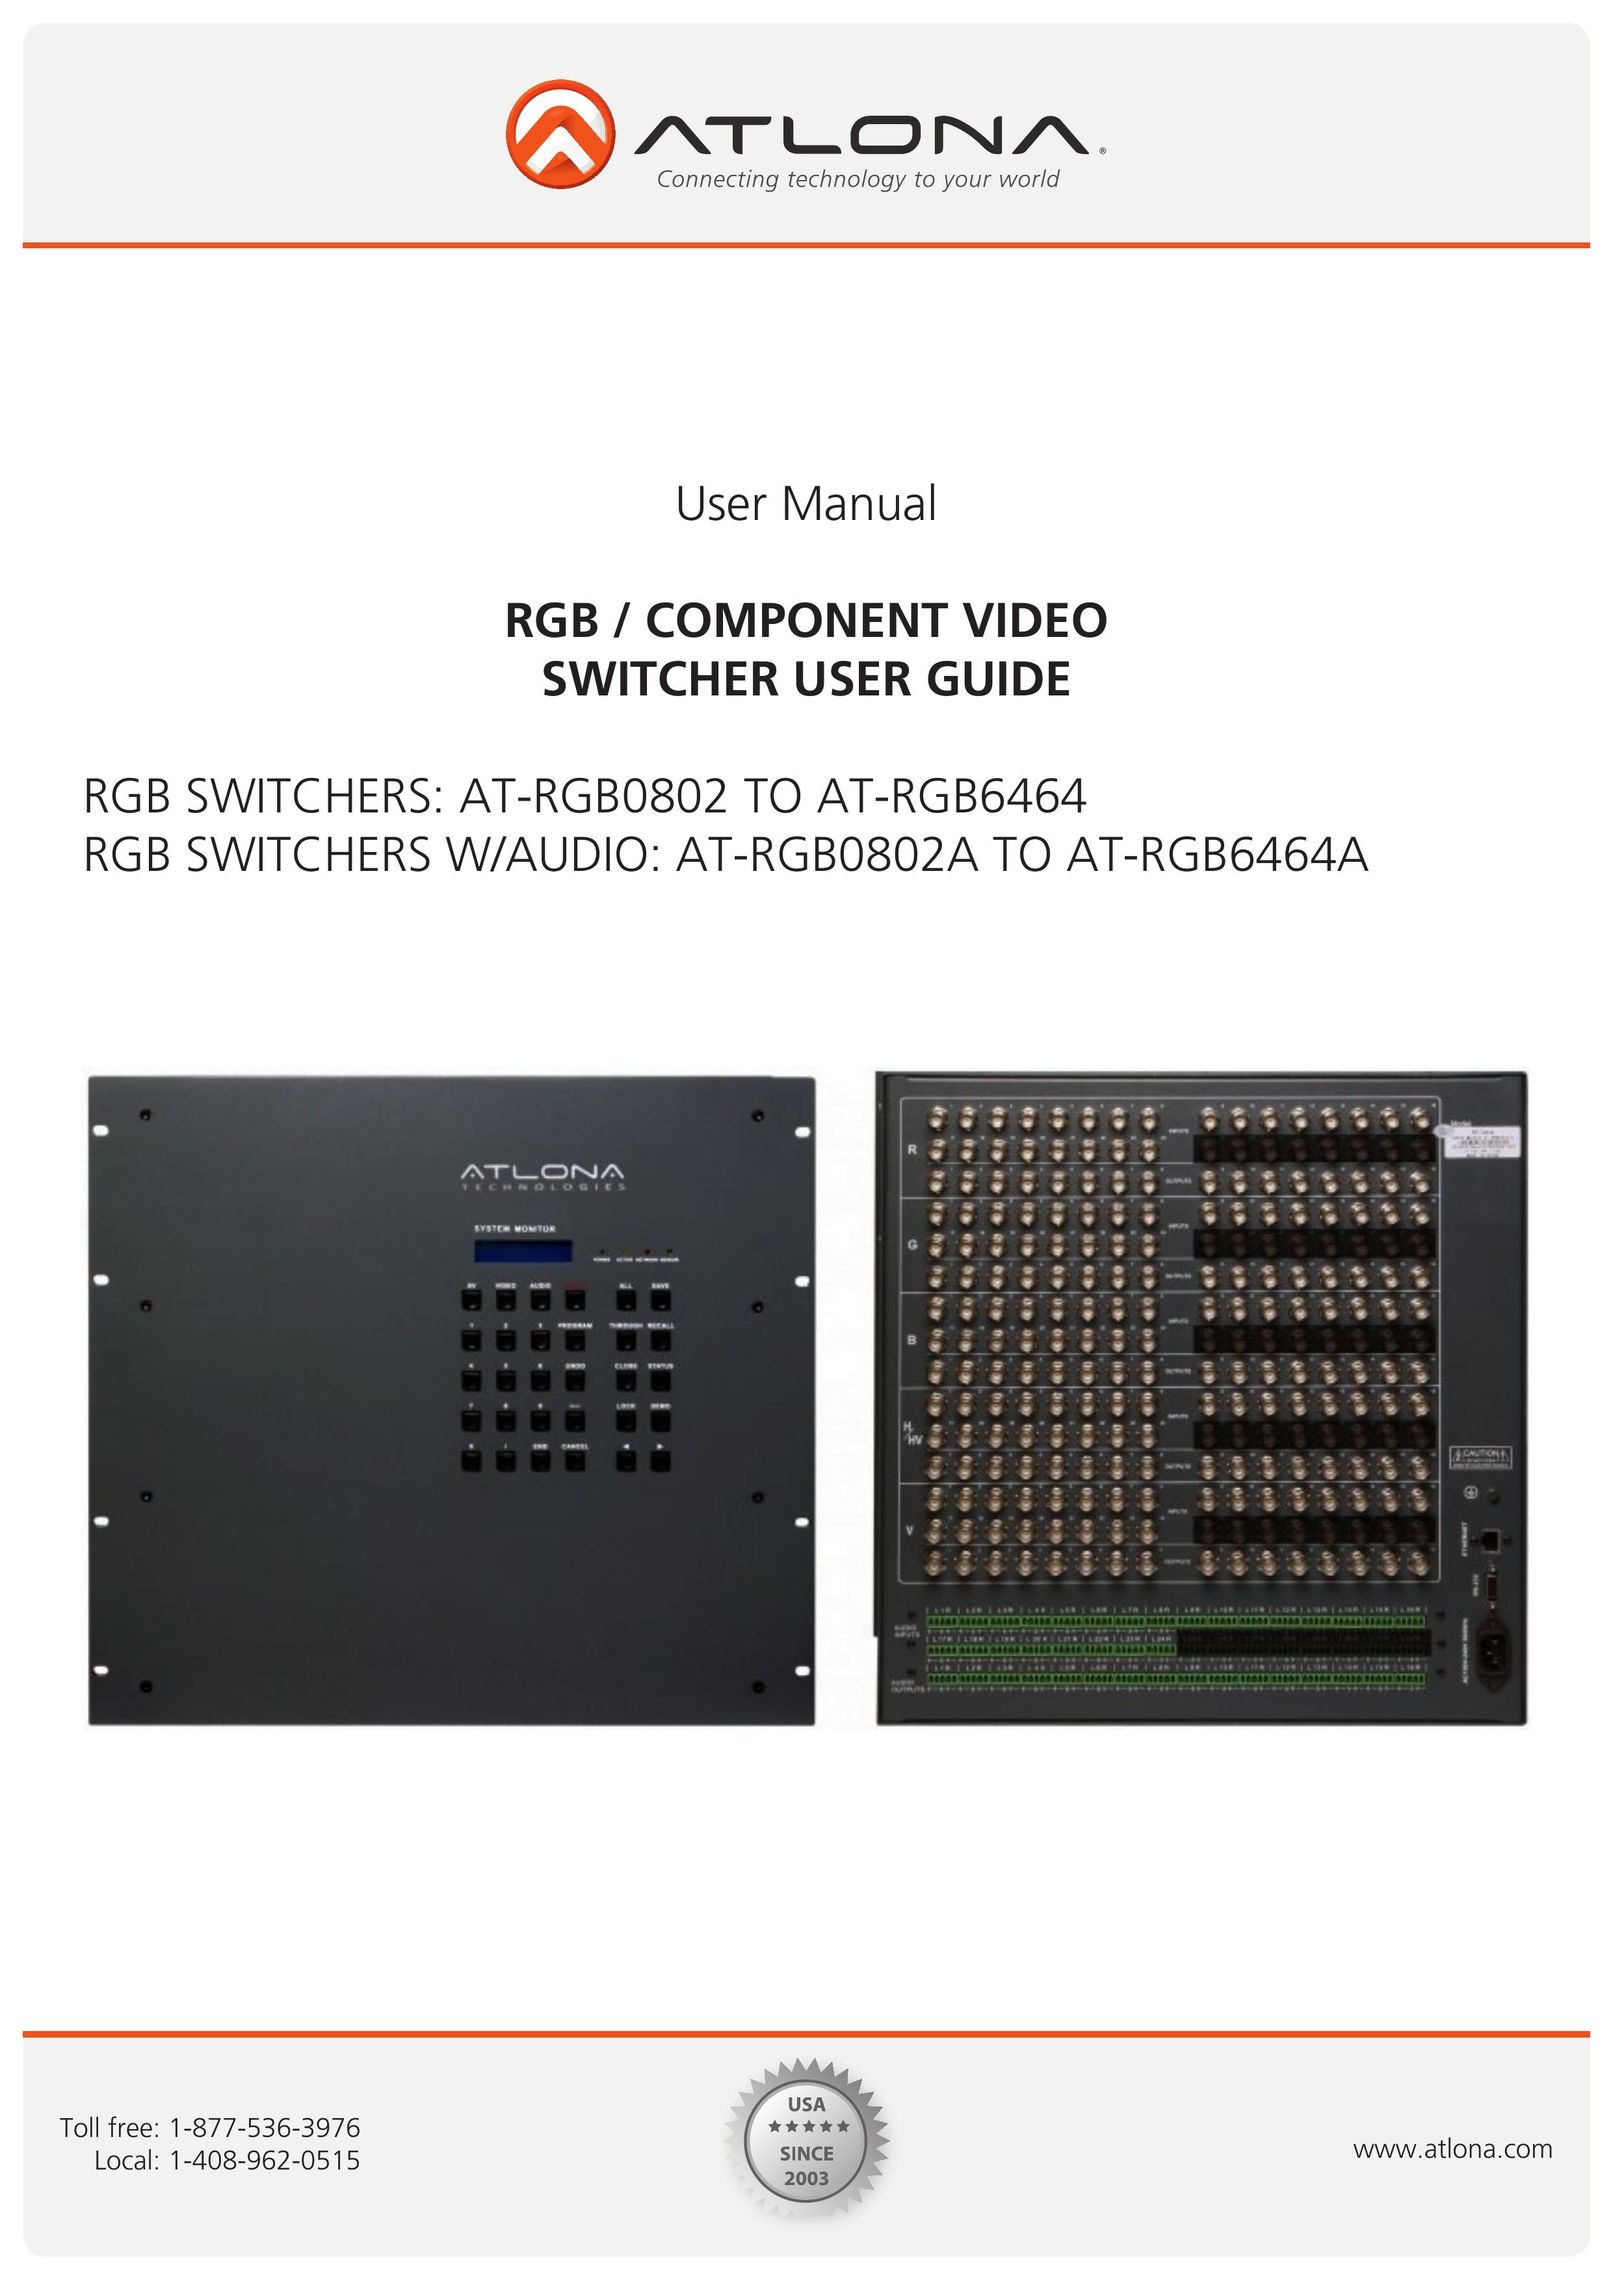 Atlona AT-RGB6464 Switch User Manual